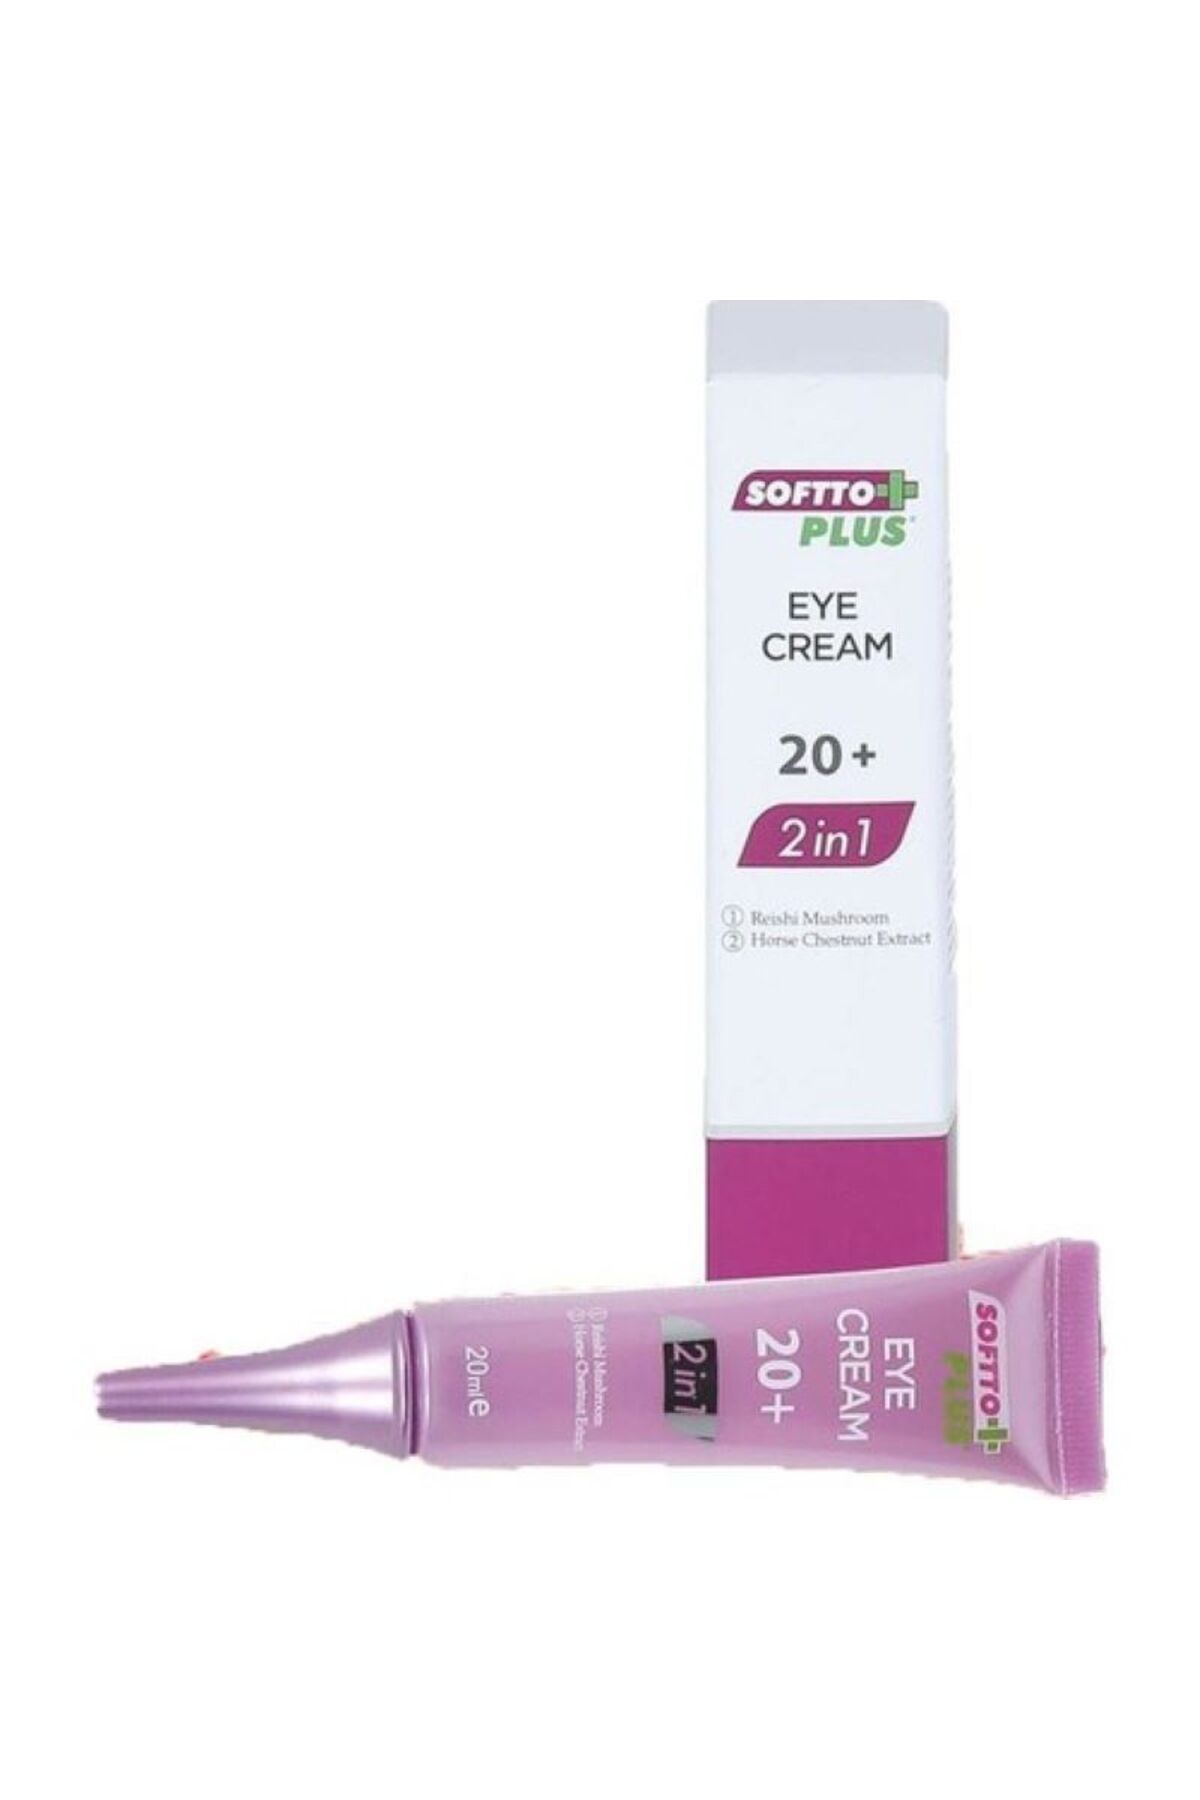 Softto Plus 2 in 1 Göz Kremi 20+ ( Eye Cream ) 20 ml